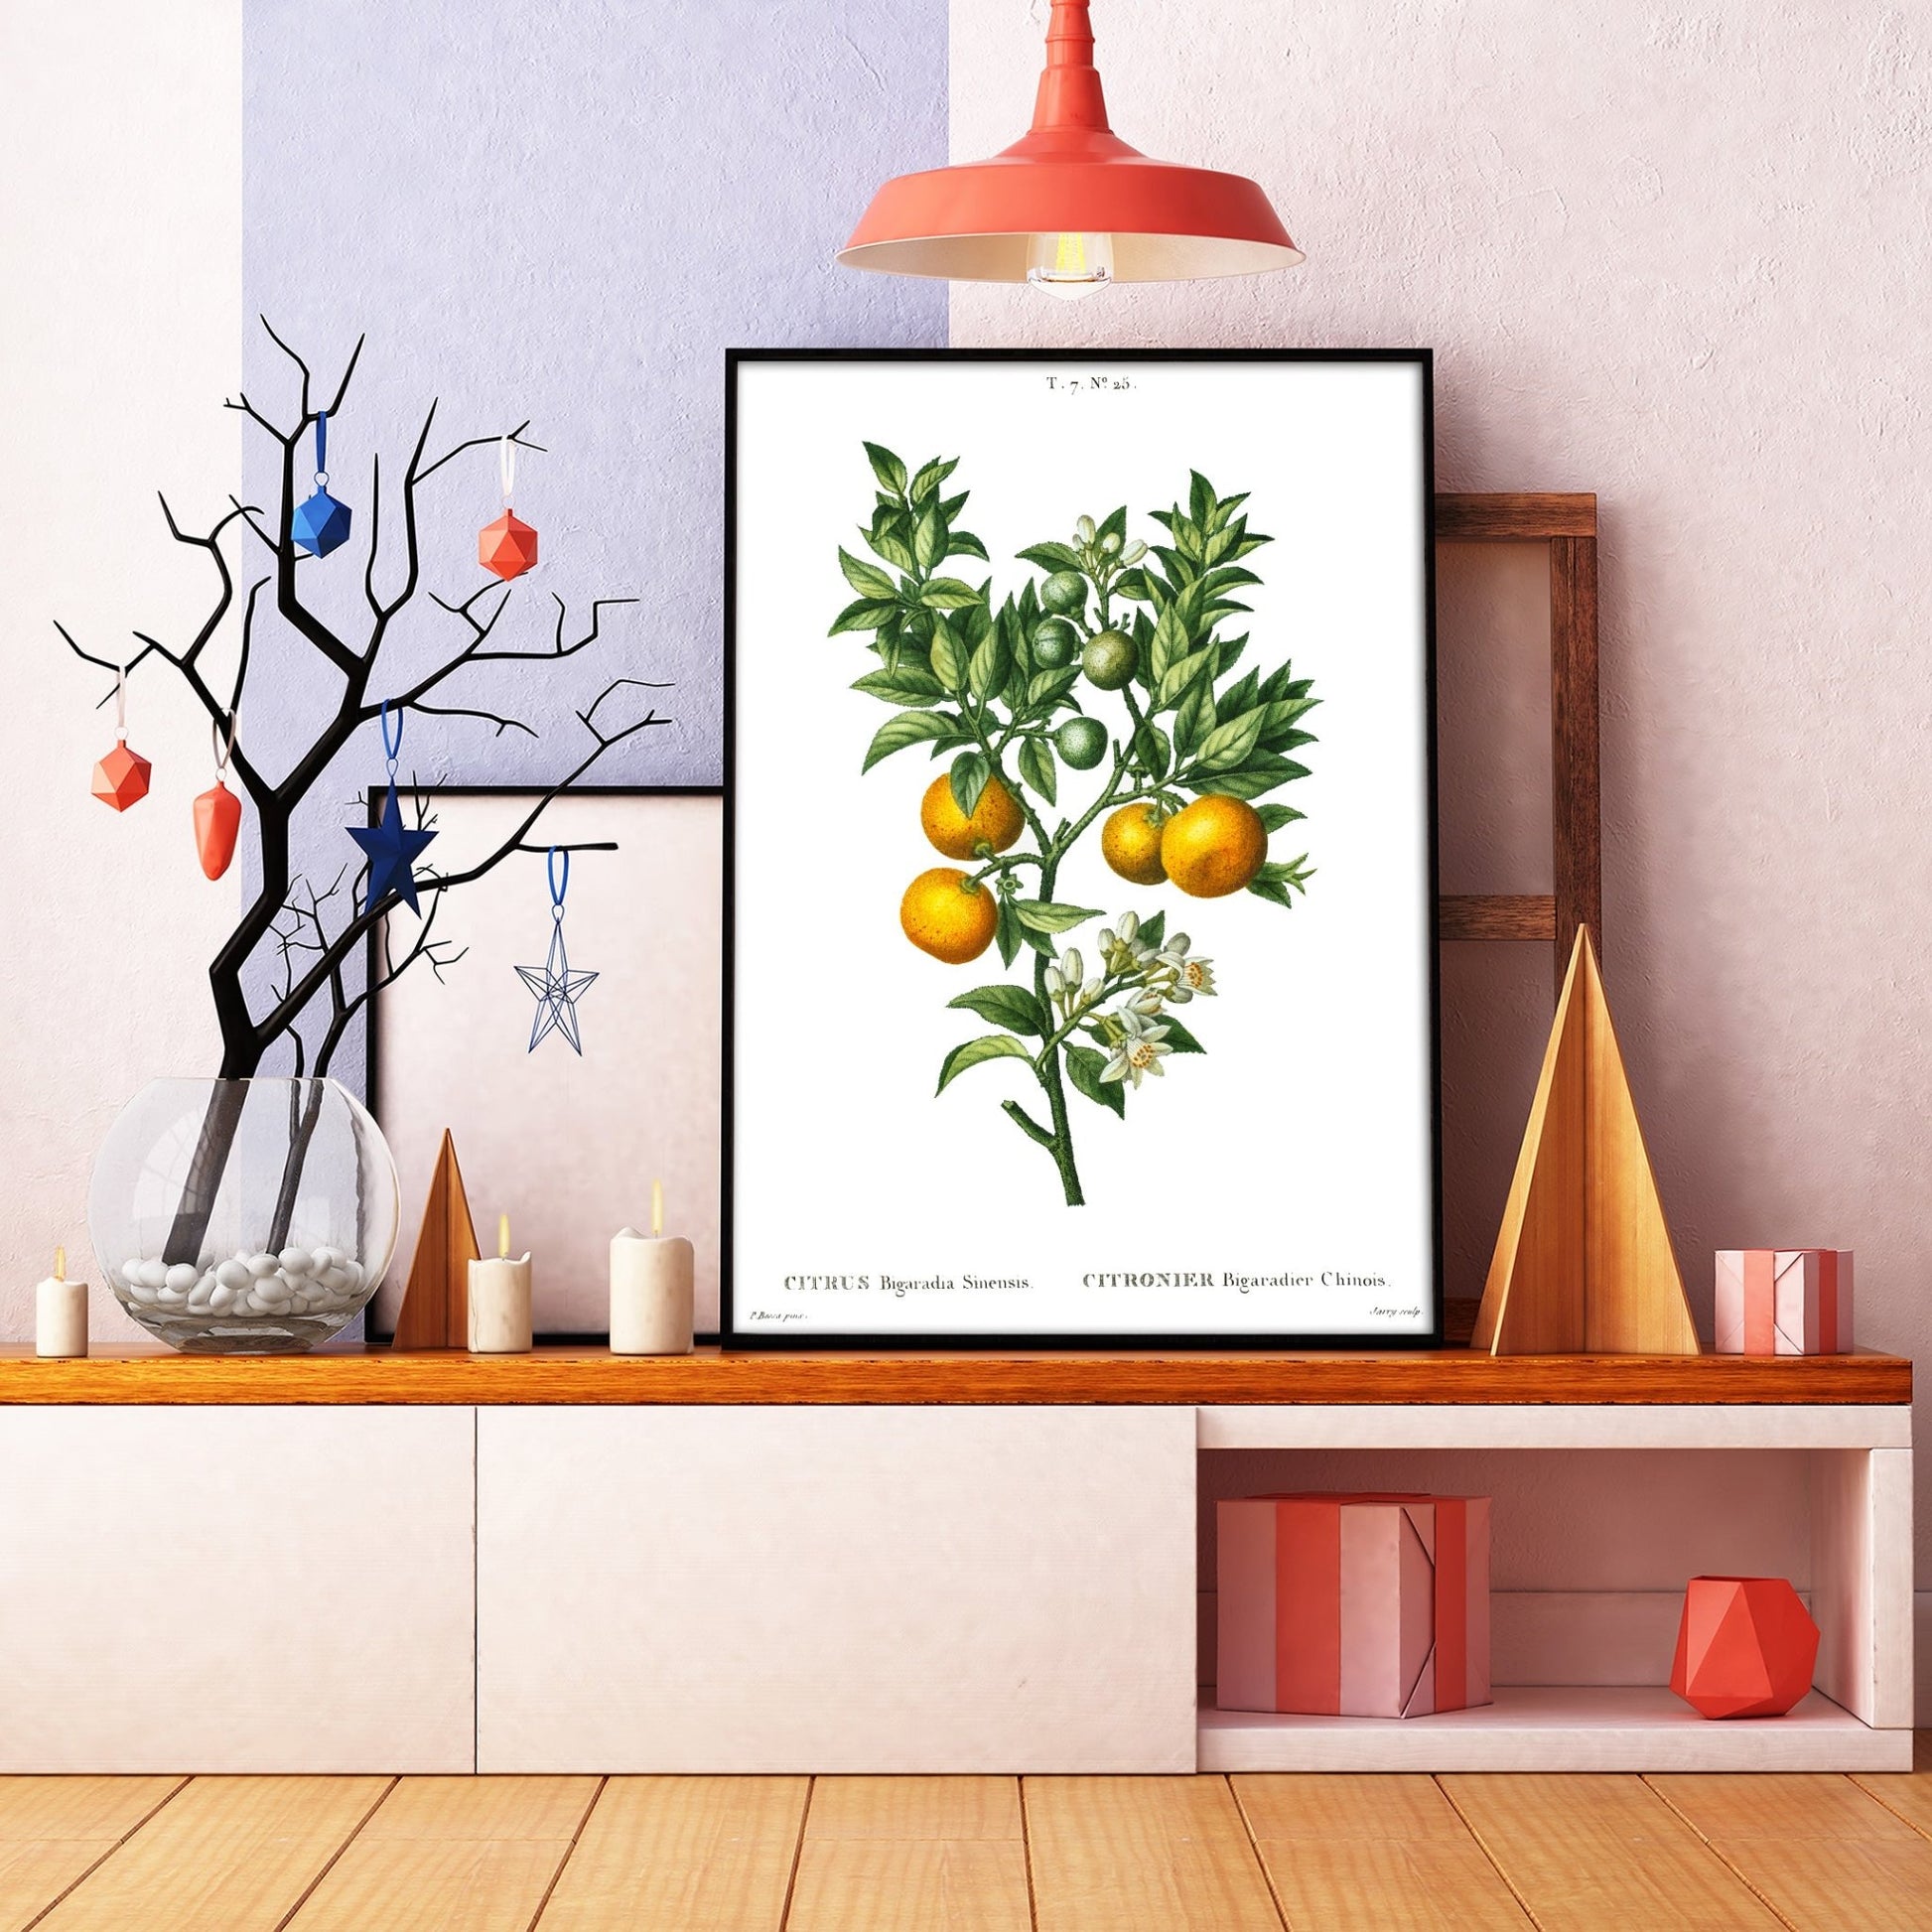 Bitter Sweet Oranges On A Branch (Citrus Bigaradia Sinensis) Print - Magic Posters